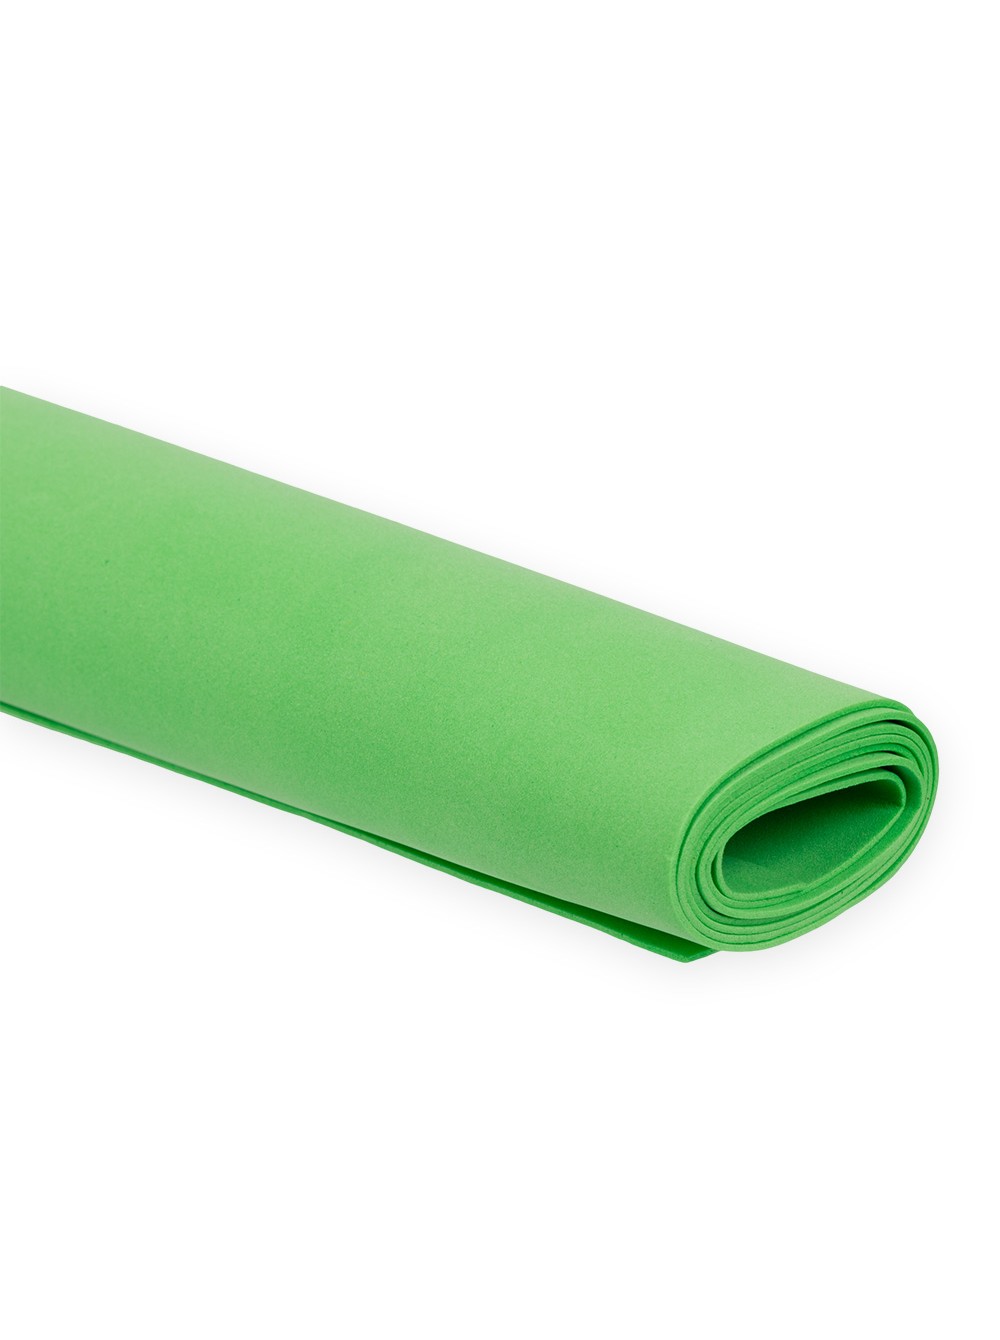 Эва 1 мм. Пластичная замша. Фоамиран зеленый. Фоамиран зеленый 1 мм. ЭВА фоамиран.